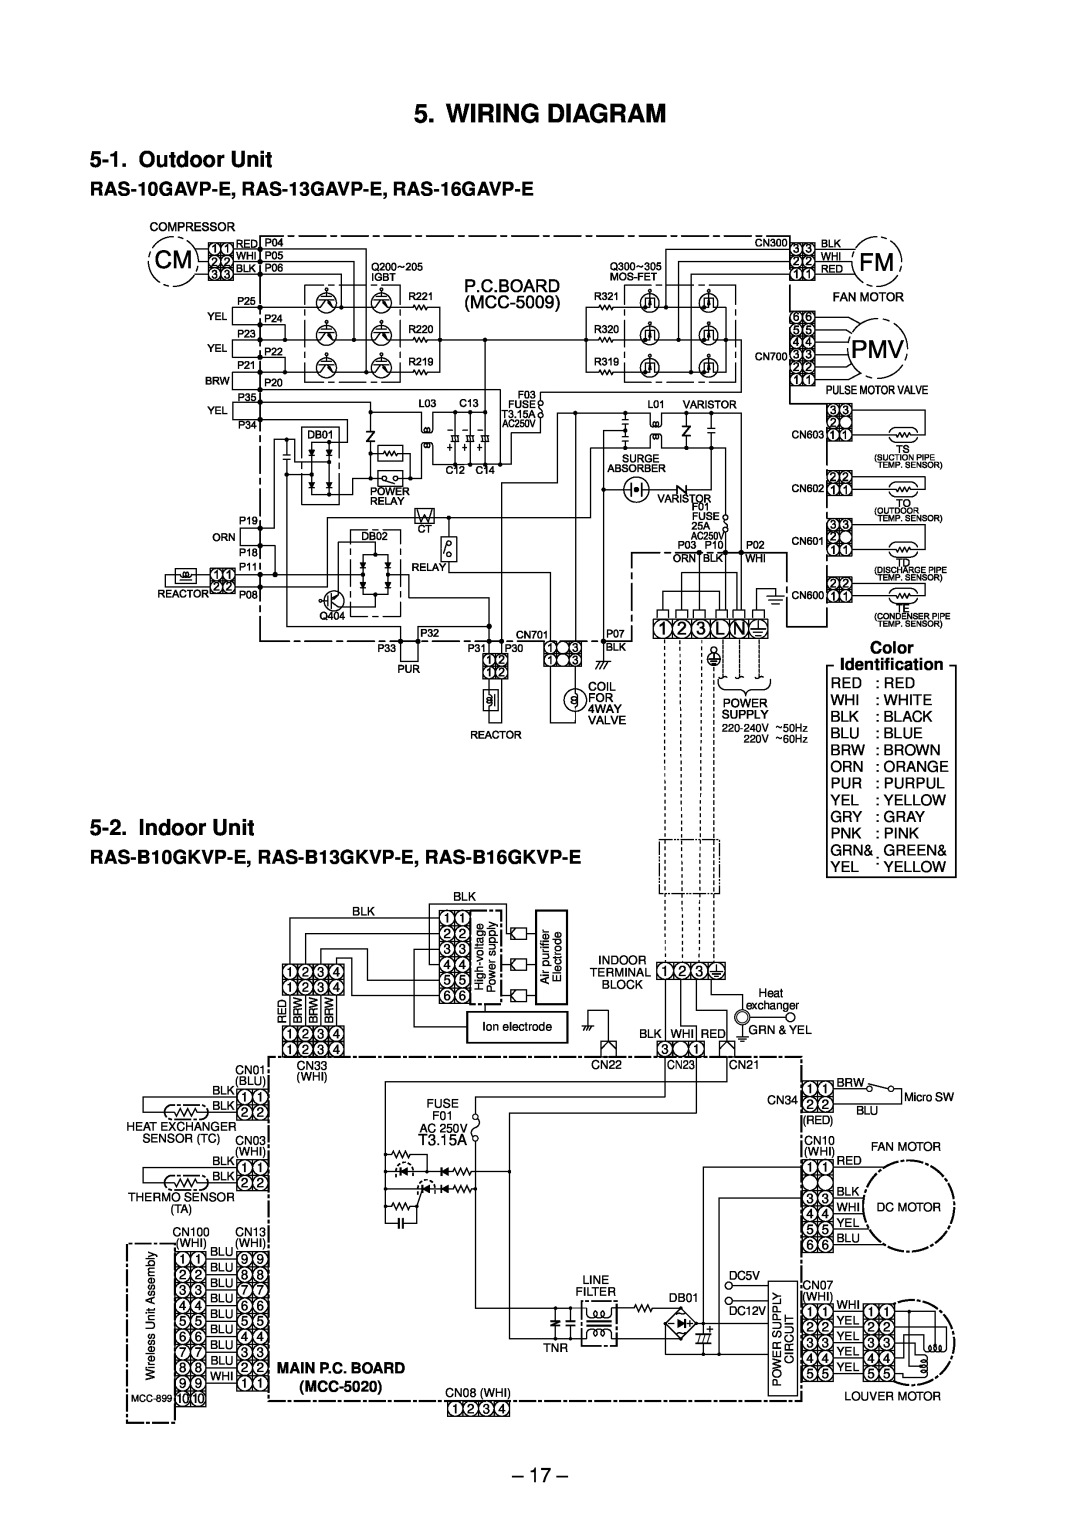 Toshiba Wiring Diagram, Outdoor Unit, Indoor Unit, RAS-10GAVP-E, RAS-13GAVP-E, RAS-16GAVP-E, Color, Identification 